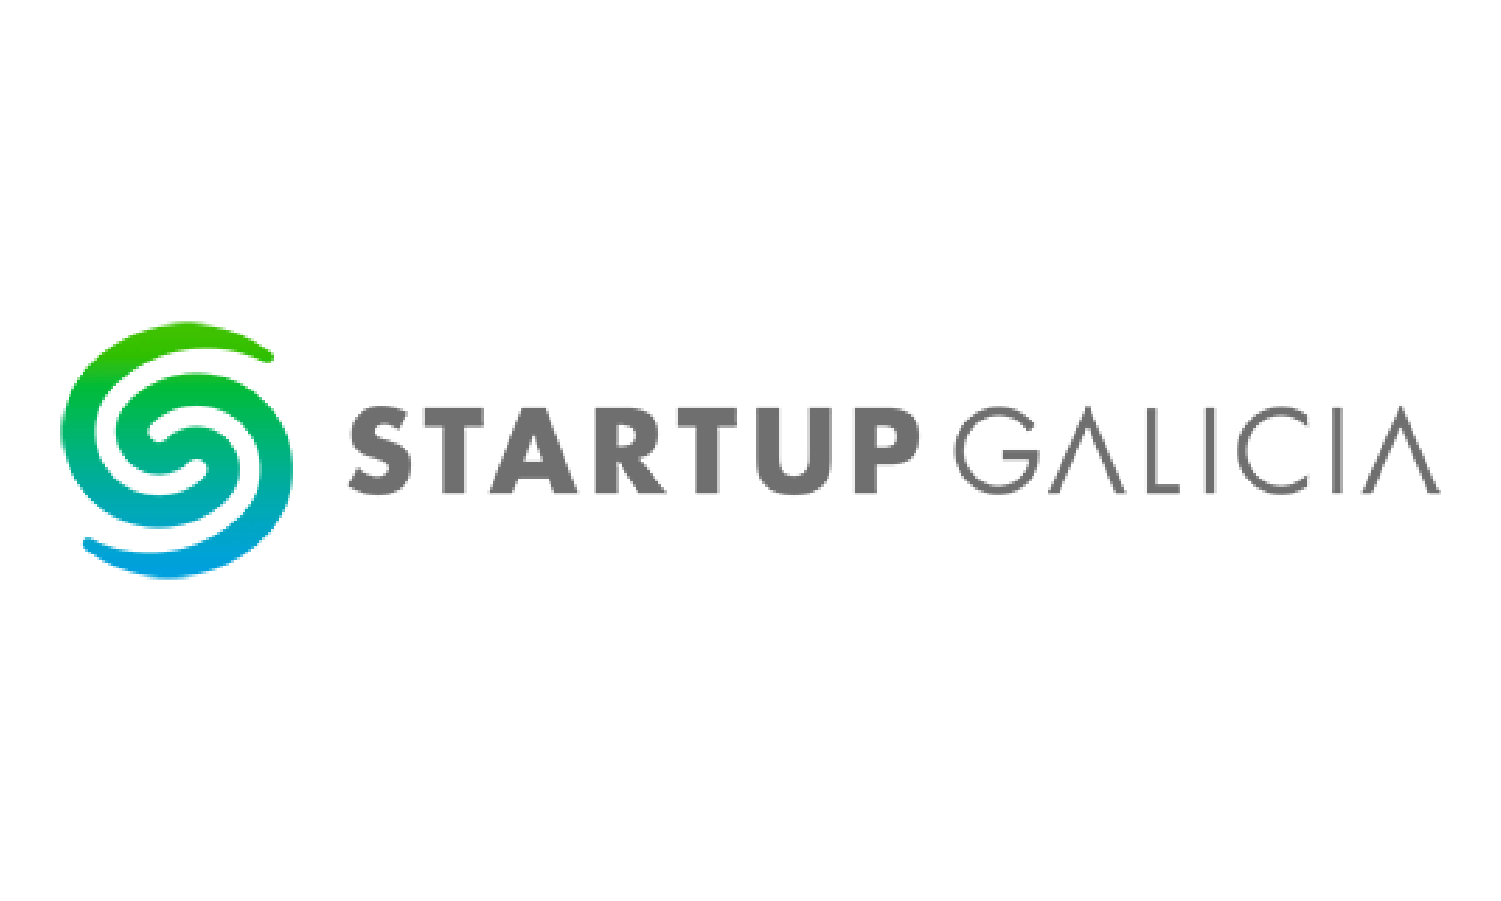 Startup Galicia